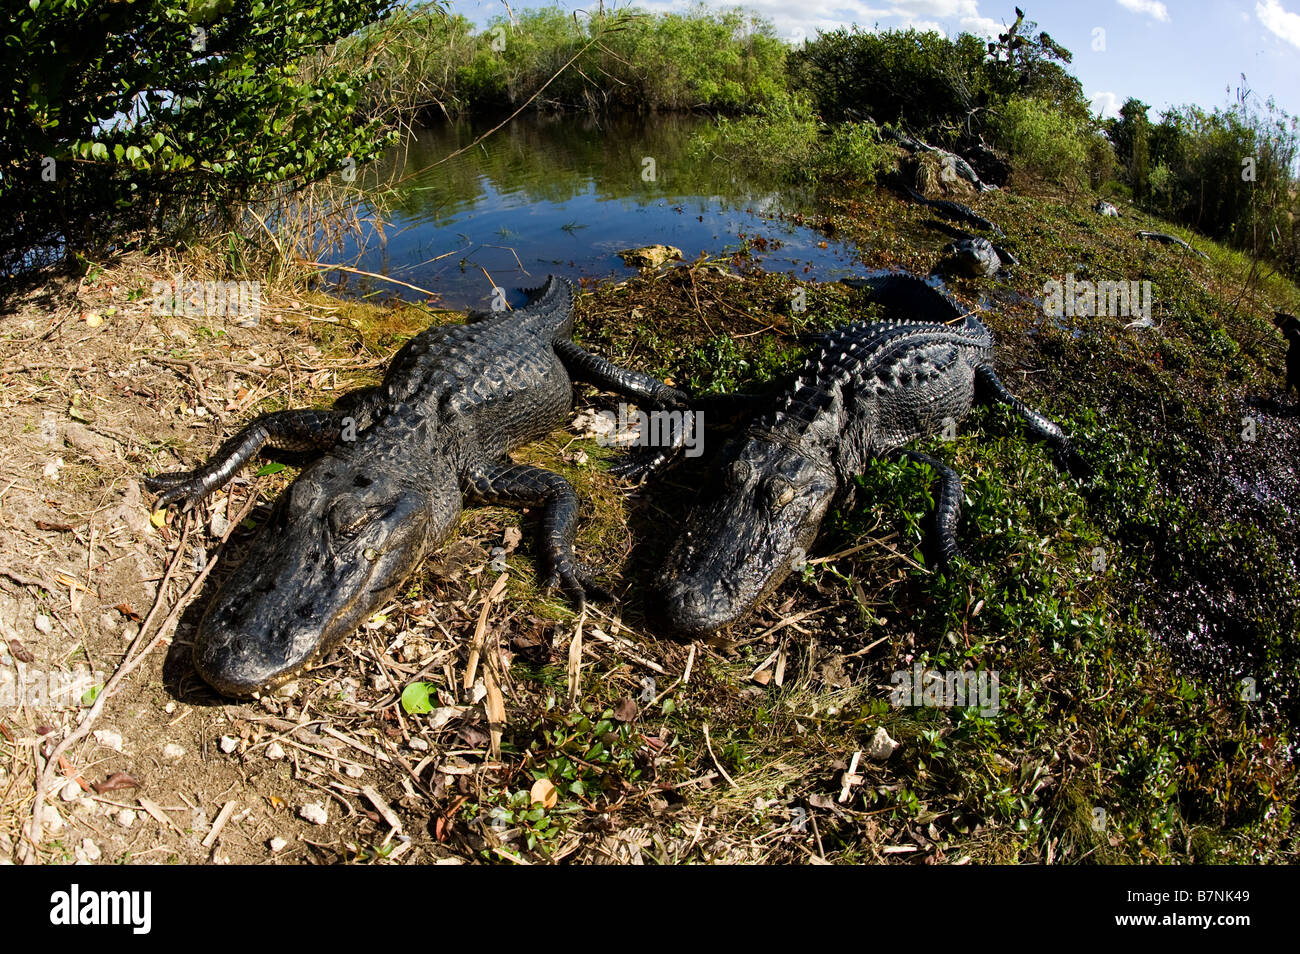 American Alligator Alligator mississippiensis basking in the sun in Everglades National Park Florida Stock Photo